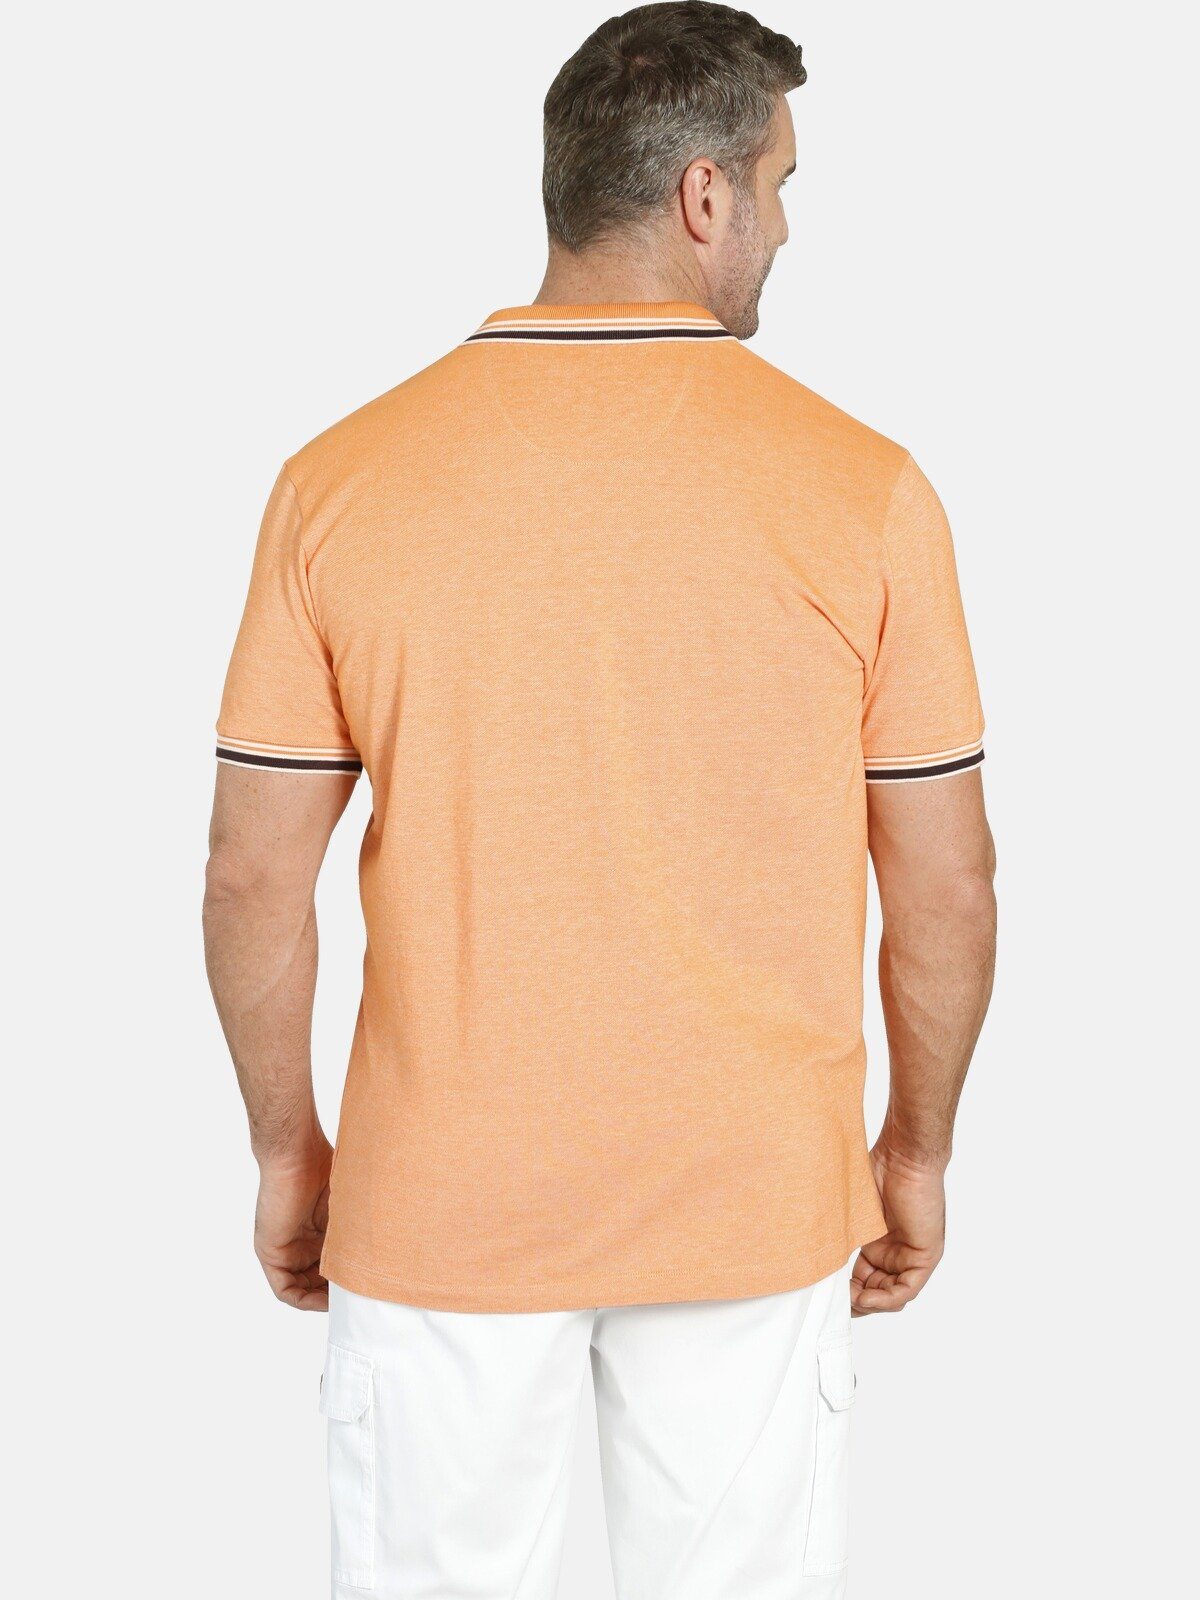 Pikee LANDON orange Charles EARL two-tone aus Colby Poloshirt